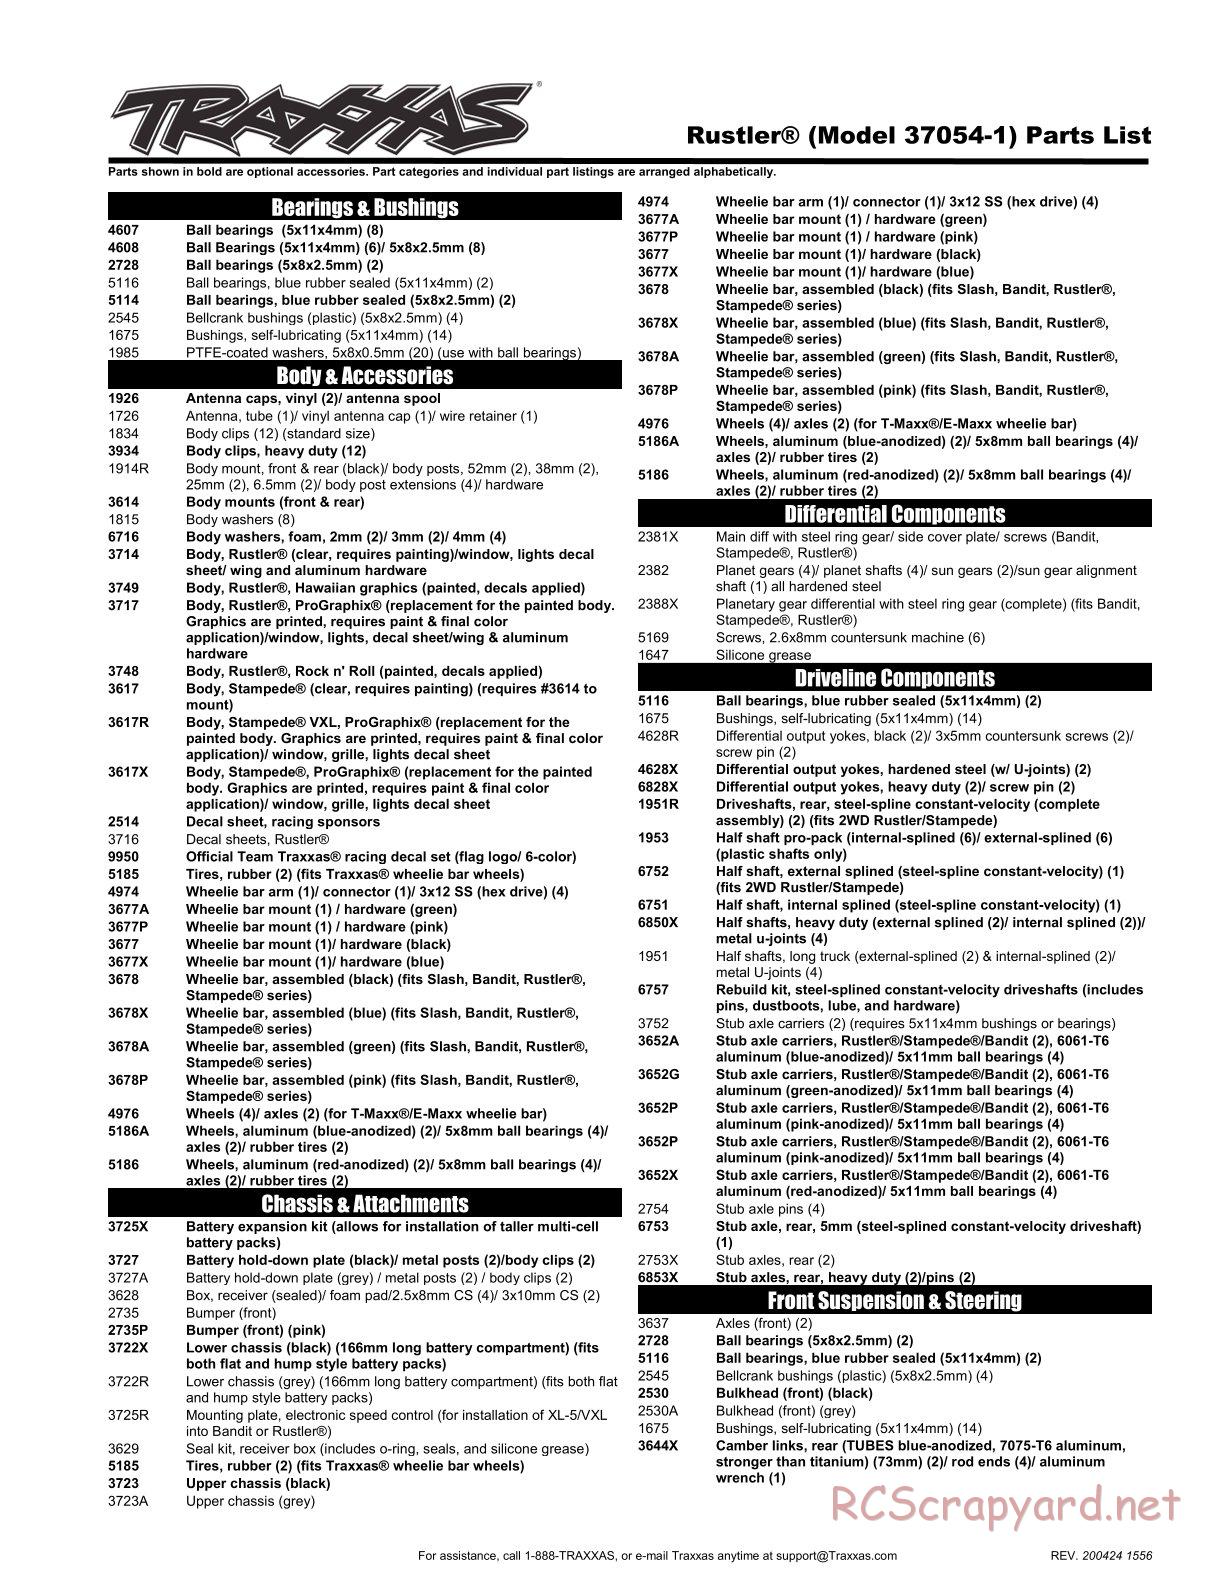 Traxxas - Rustler XL-5 - Parts List - Page 1